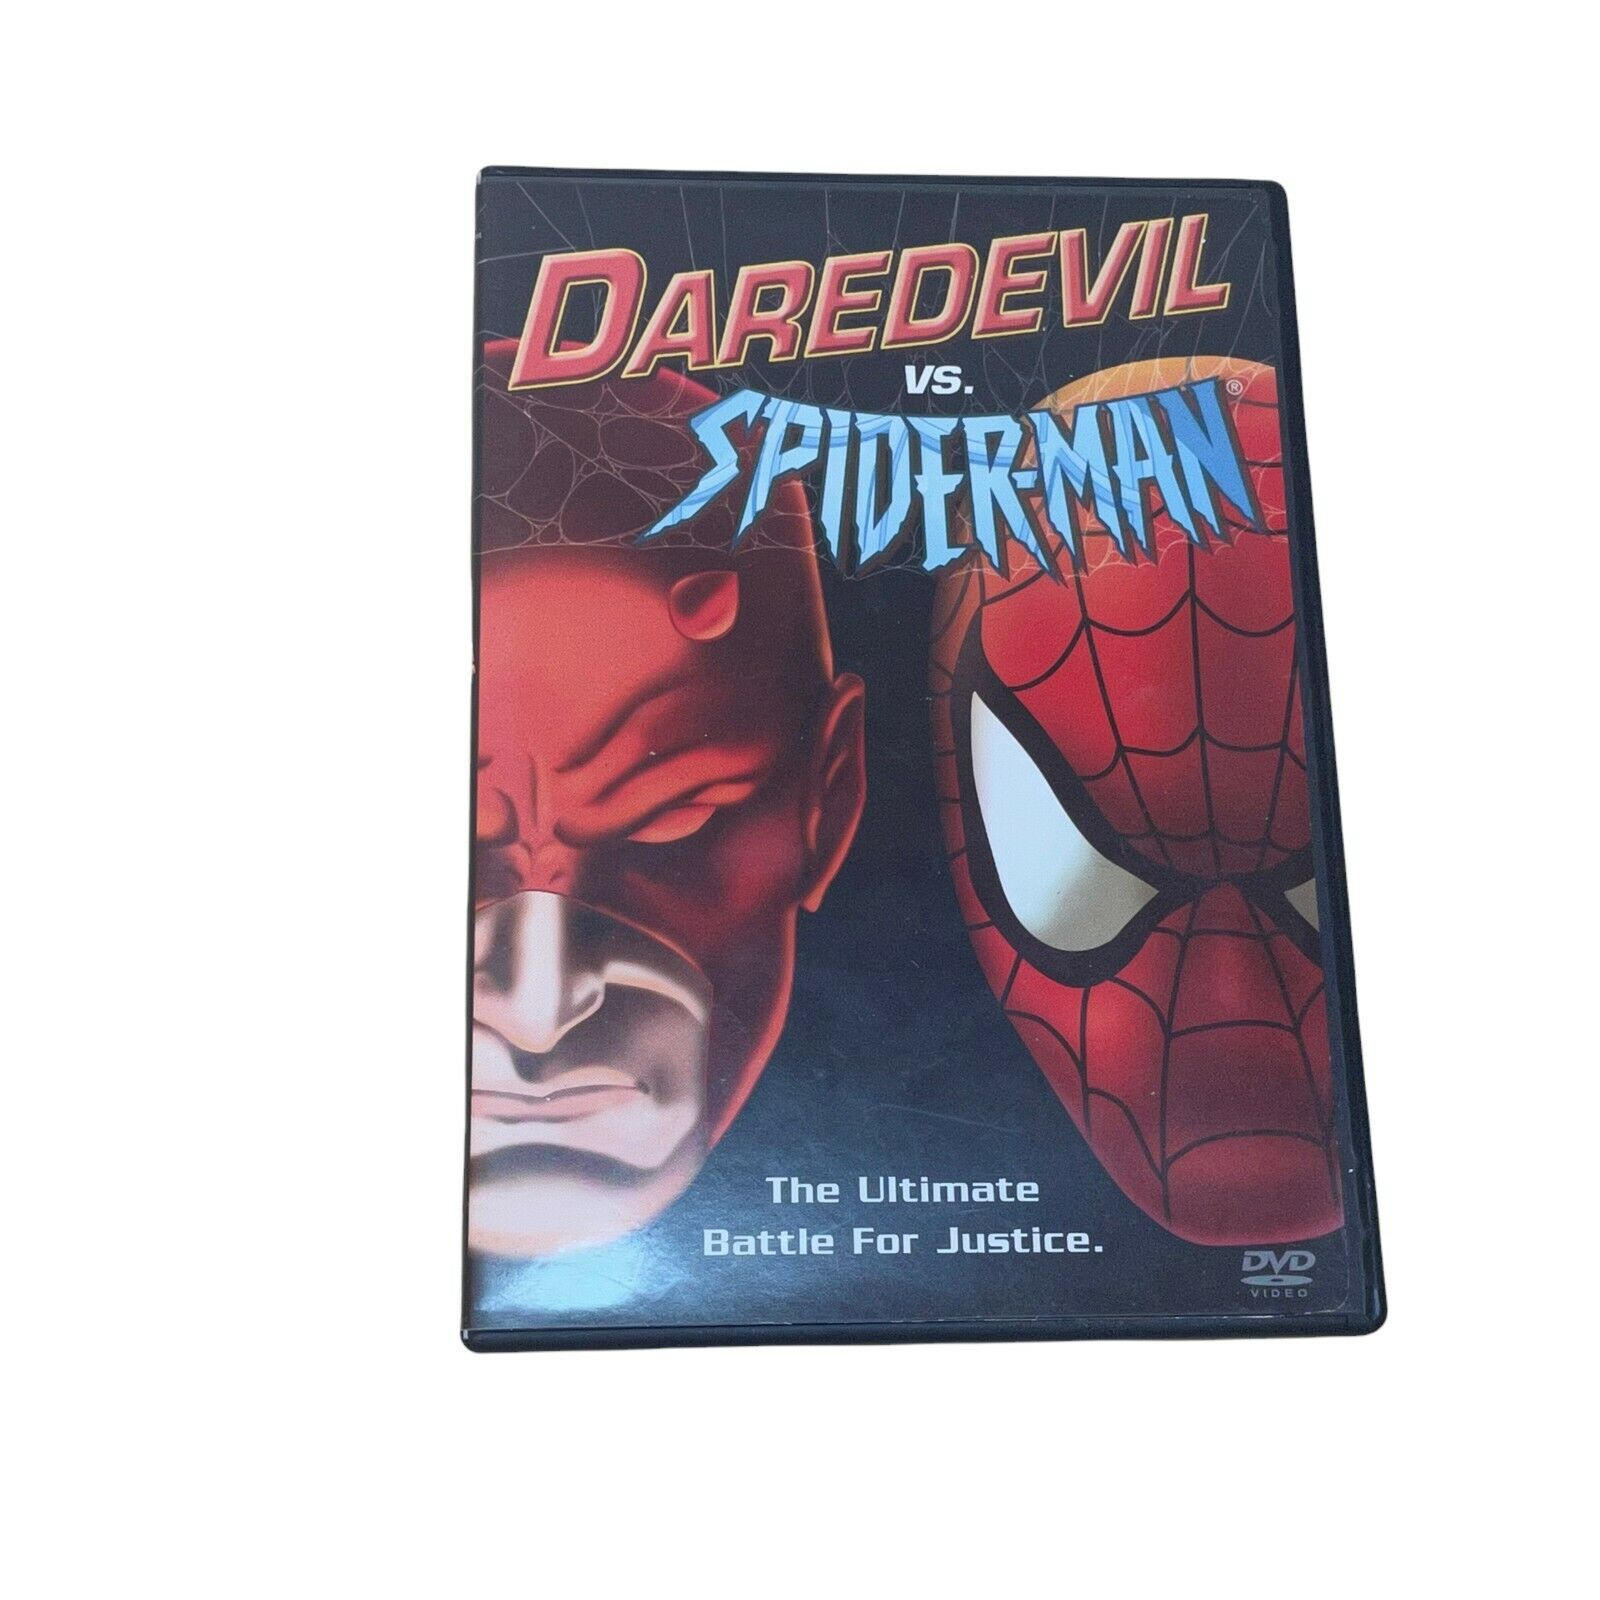 Spider-Man - Daredevil Vs. Spider-Man (Animated Series) - DVD - VERY GOOD  786936203196 | eBay